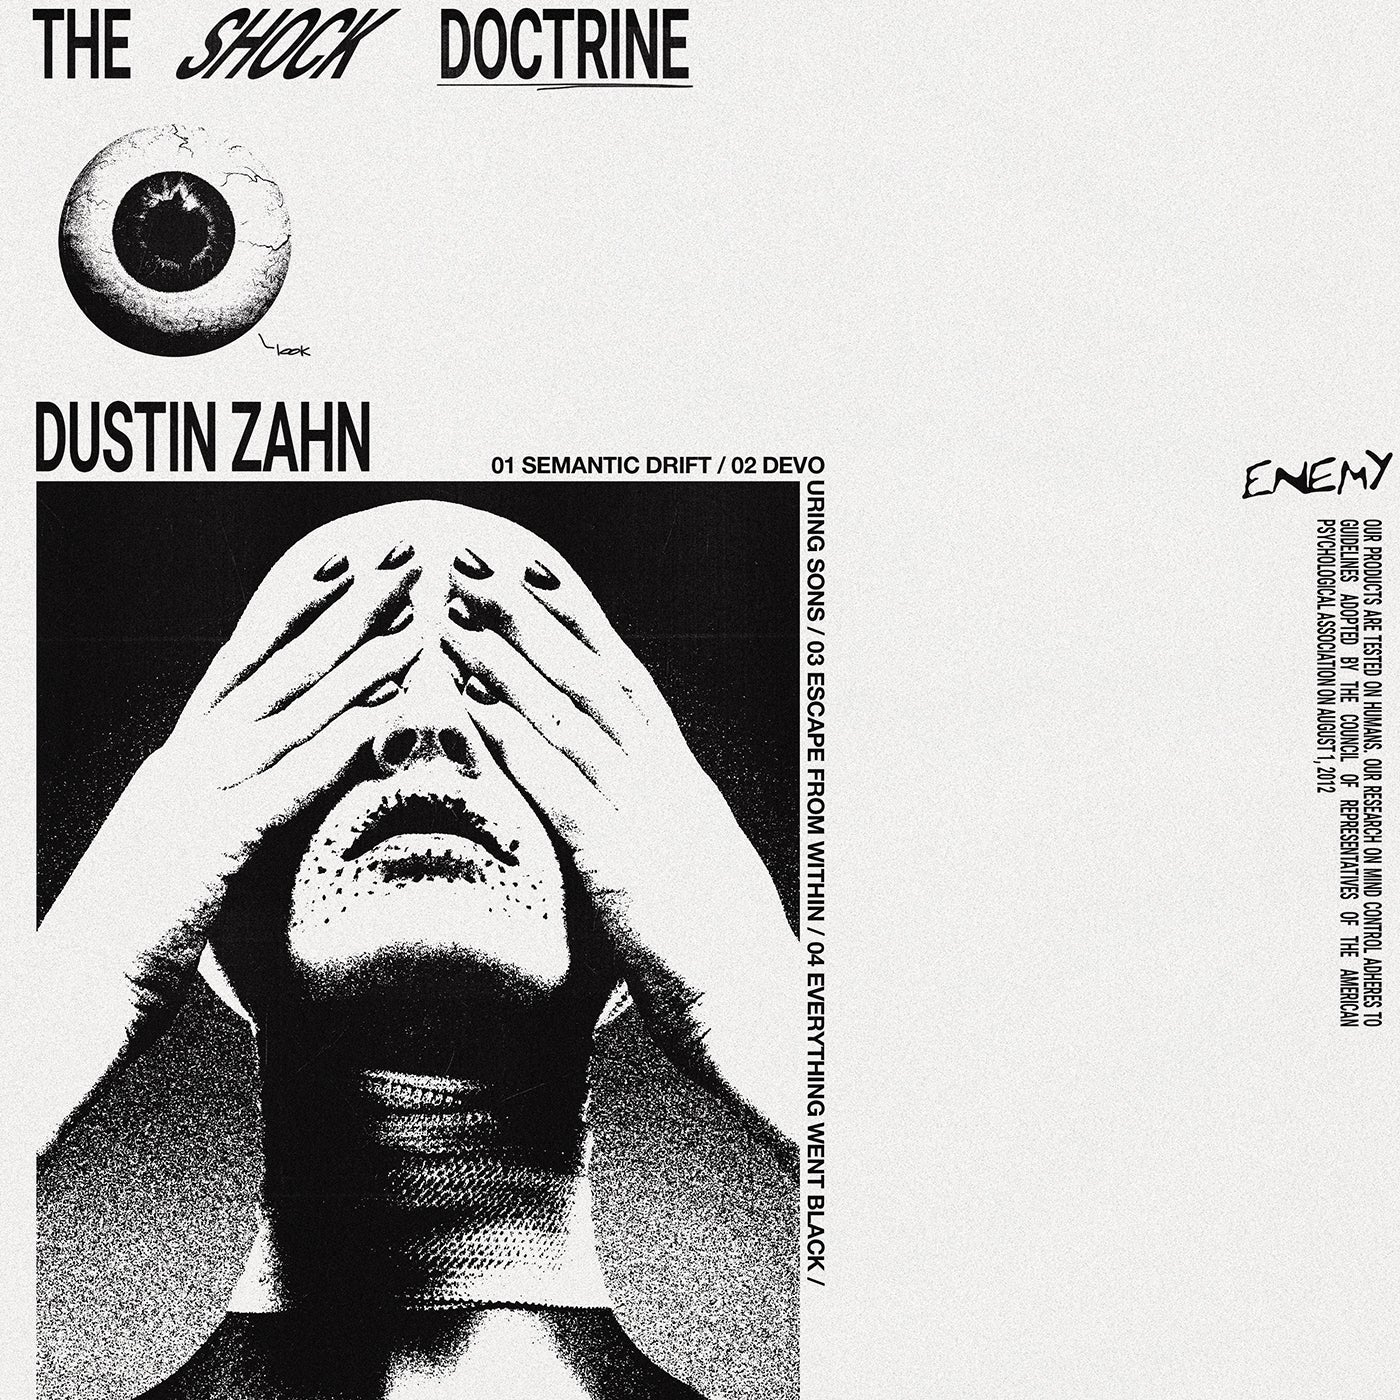 Dustin Zahn – The Shock Doctrine [NME006]